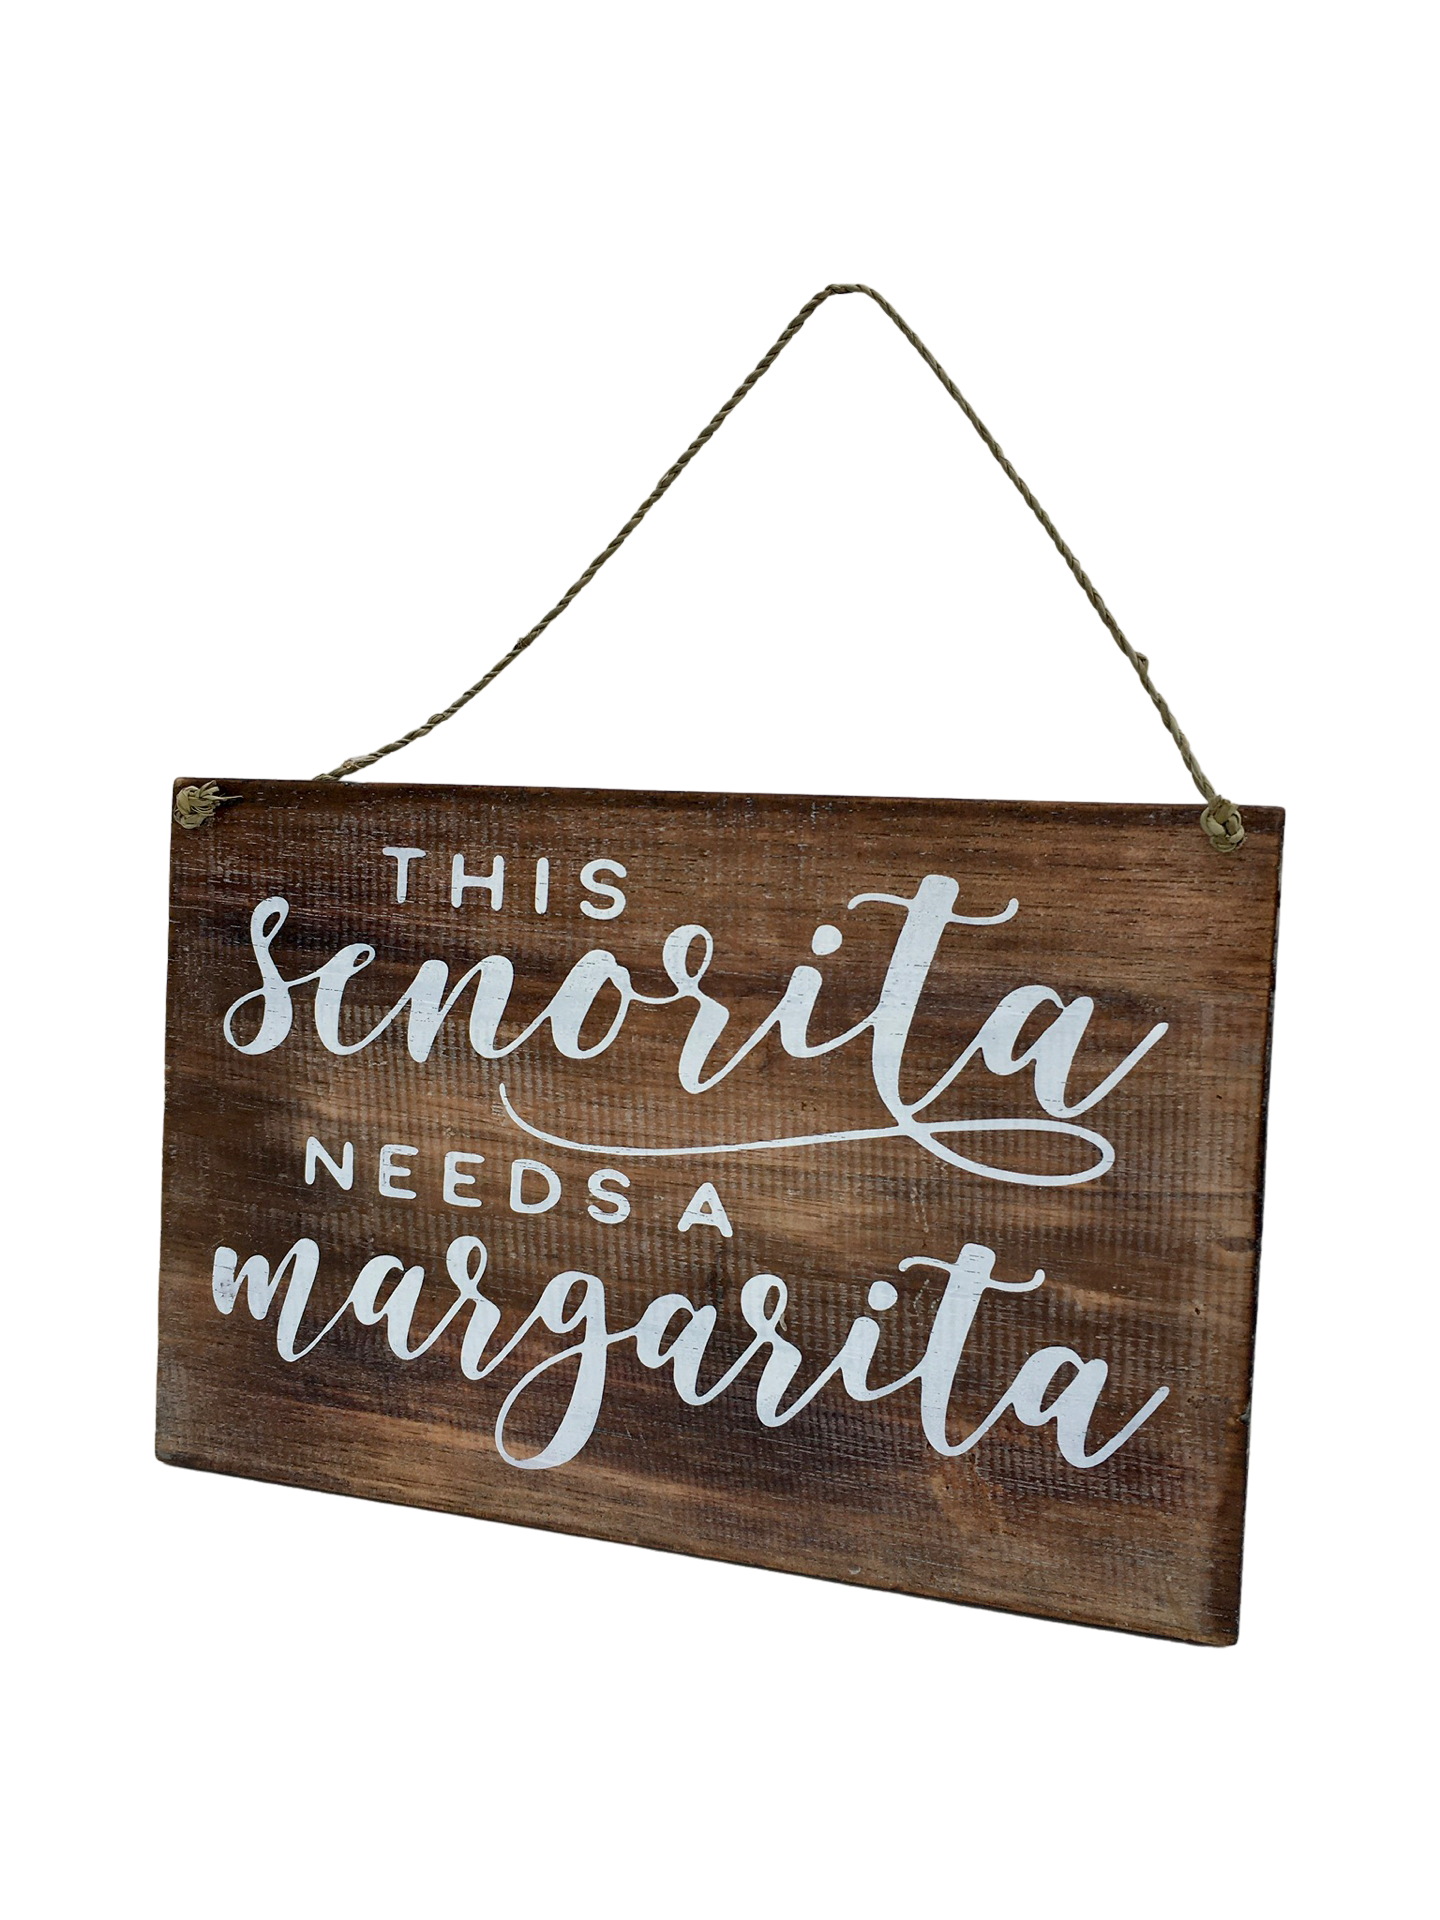 A Wooden sign that says - This Senorita needs a margherita'. 